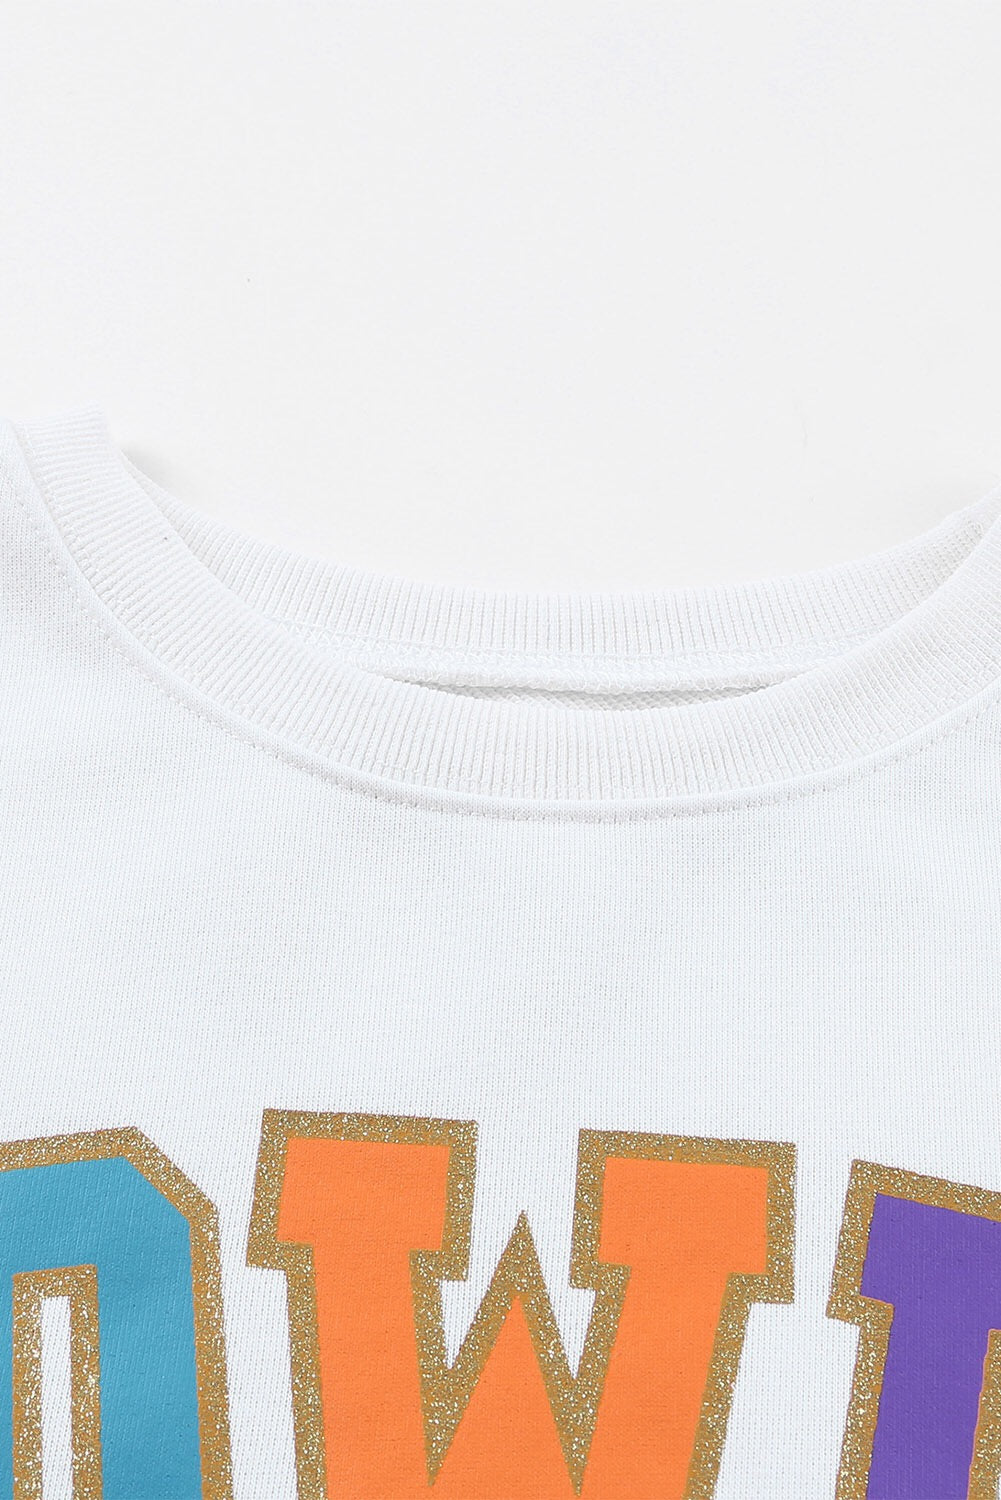 White HOWDY Letter Color Block Print Oversized Sweatshirt